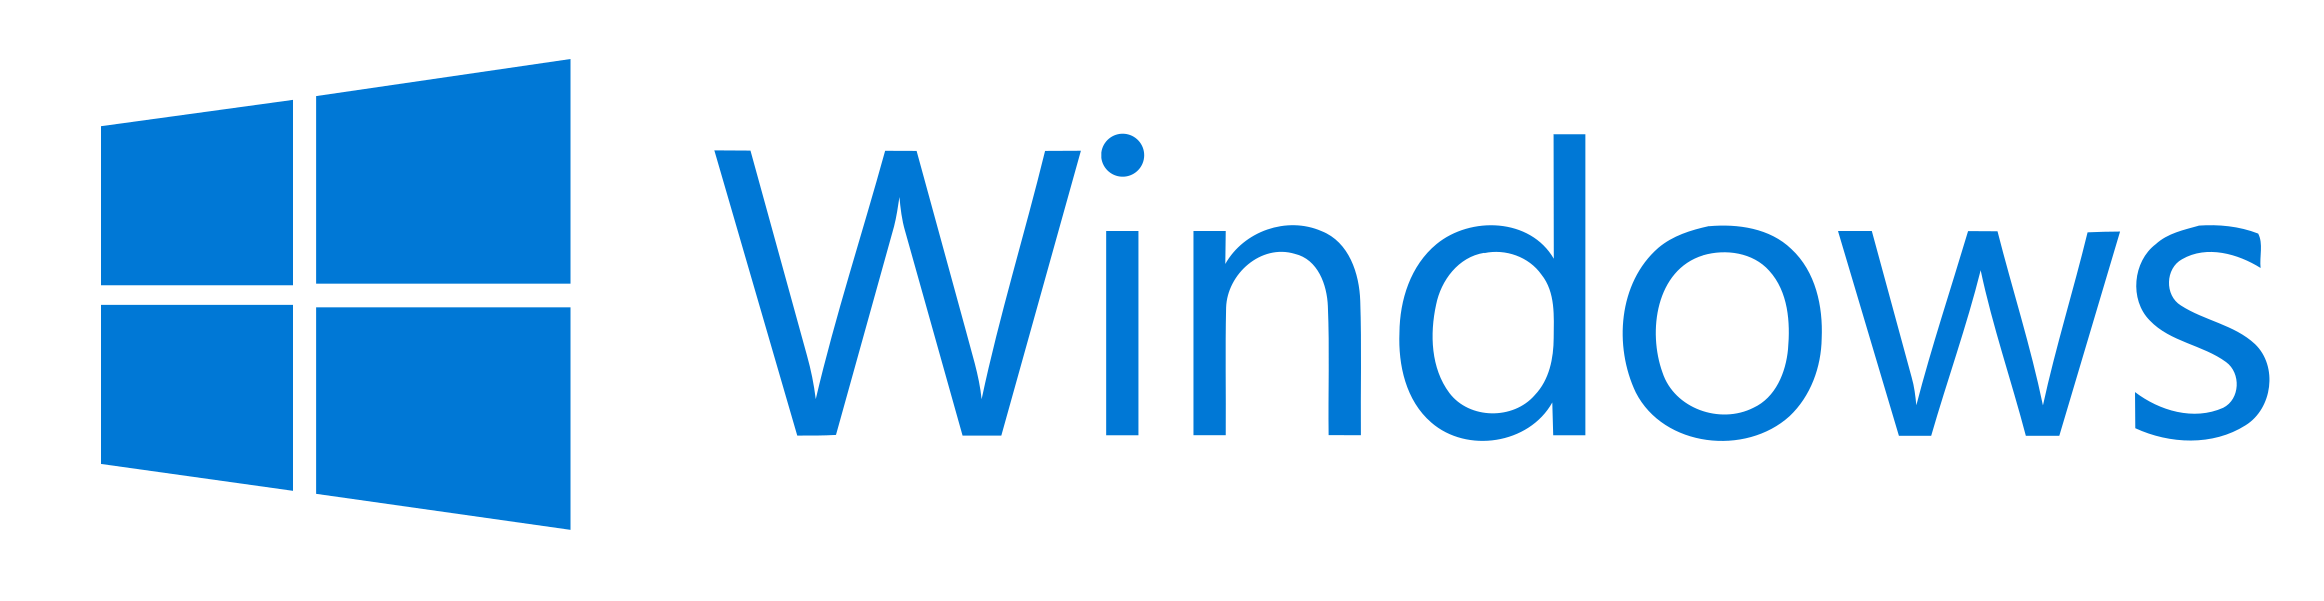 Windows logo_en